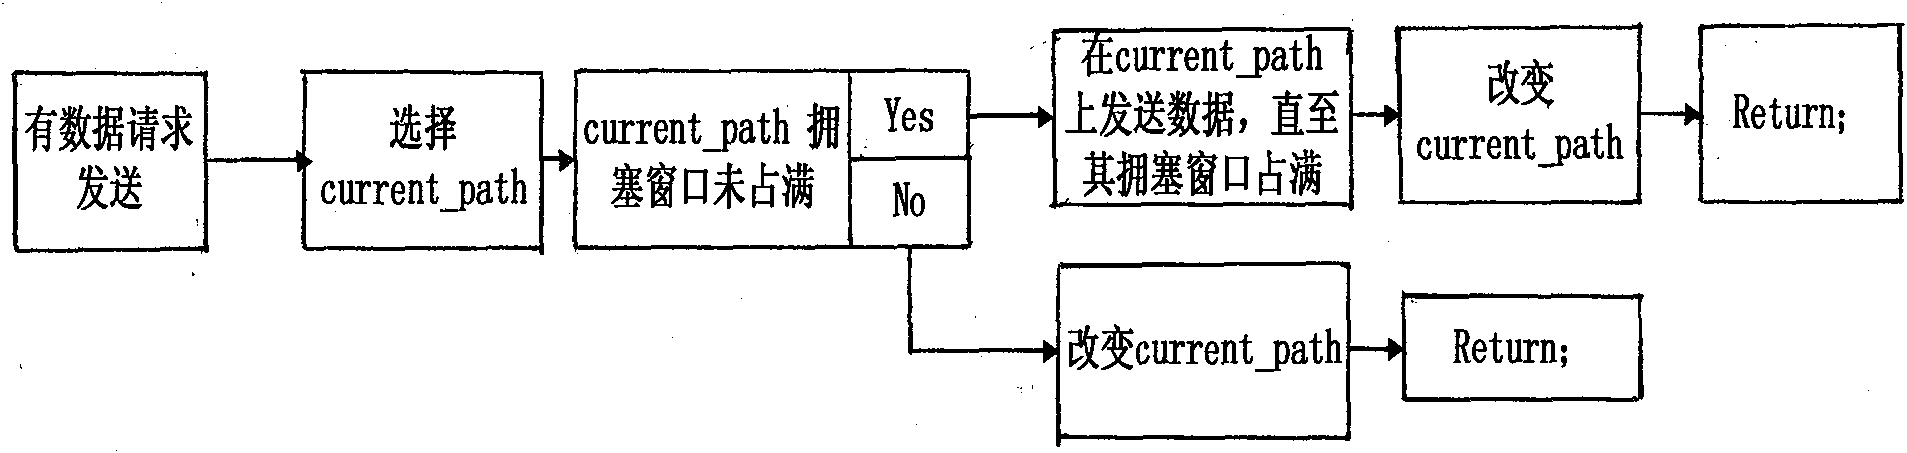 Multipath cocurrent transmission method based on SCTP (Stream Control Transmission Protocol)